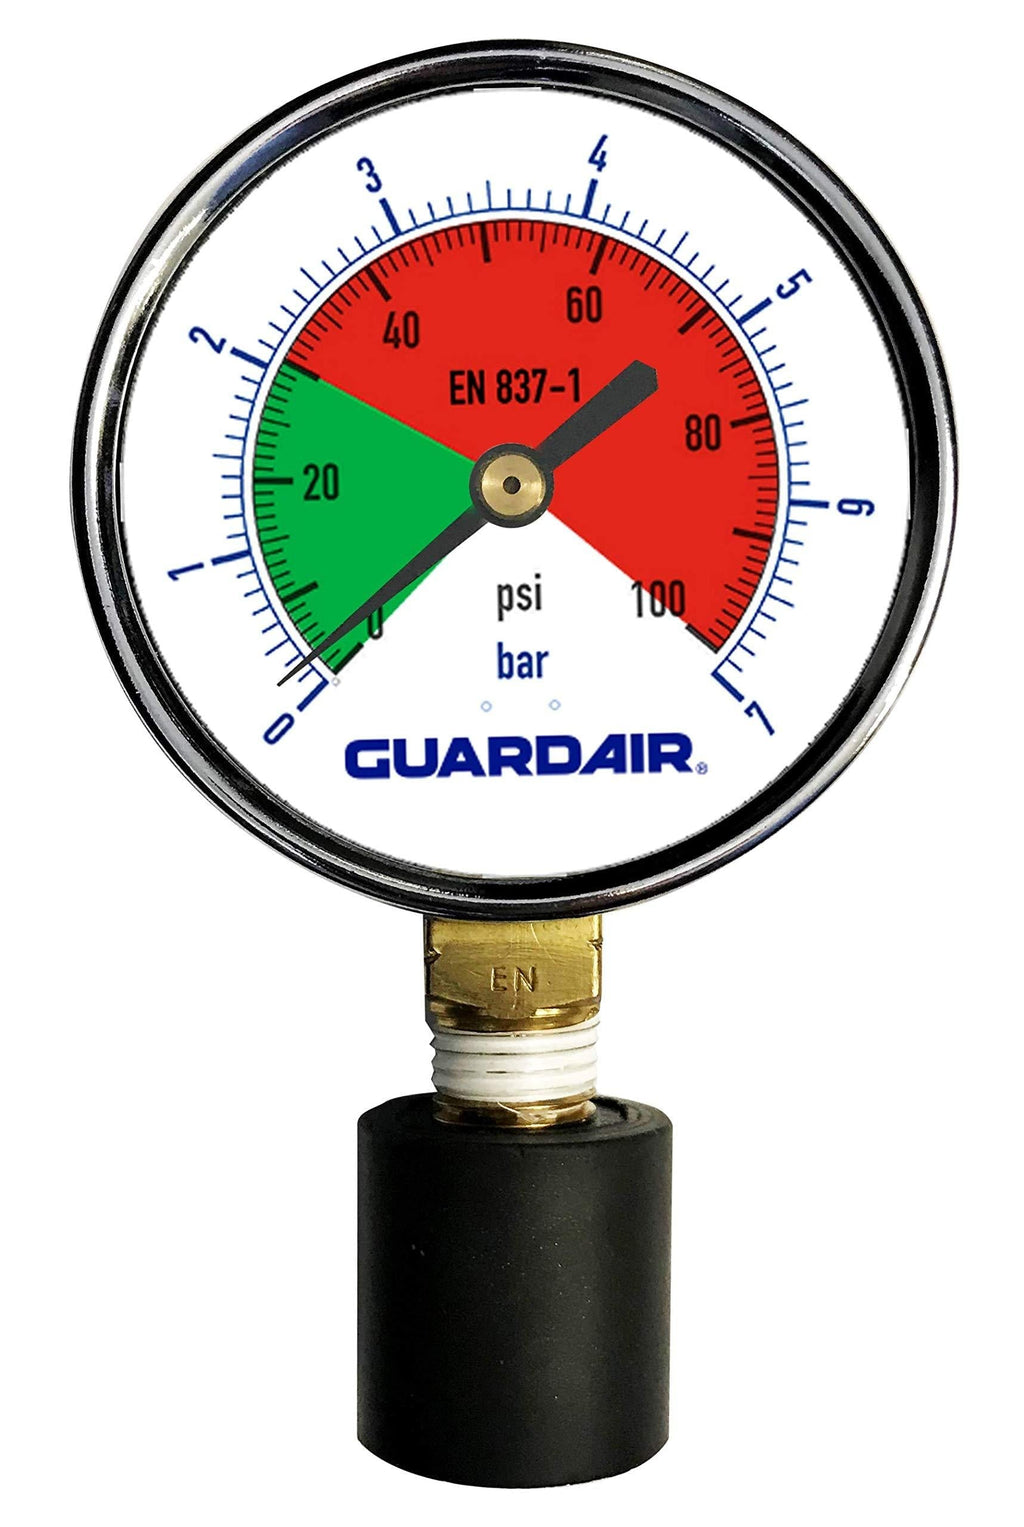  [AUSTRALIA] - Guardair 100M05A 0-100 PSI Pressure Gauge with Rubber Tip